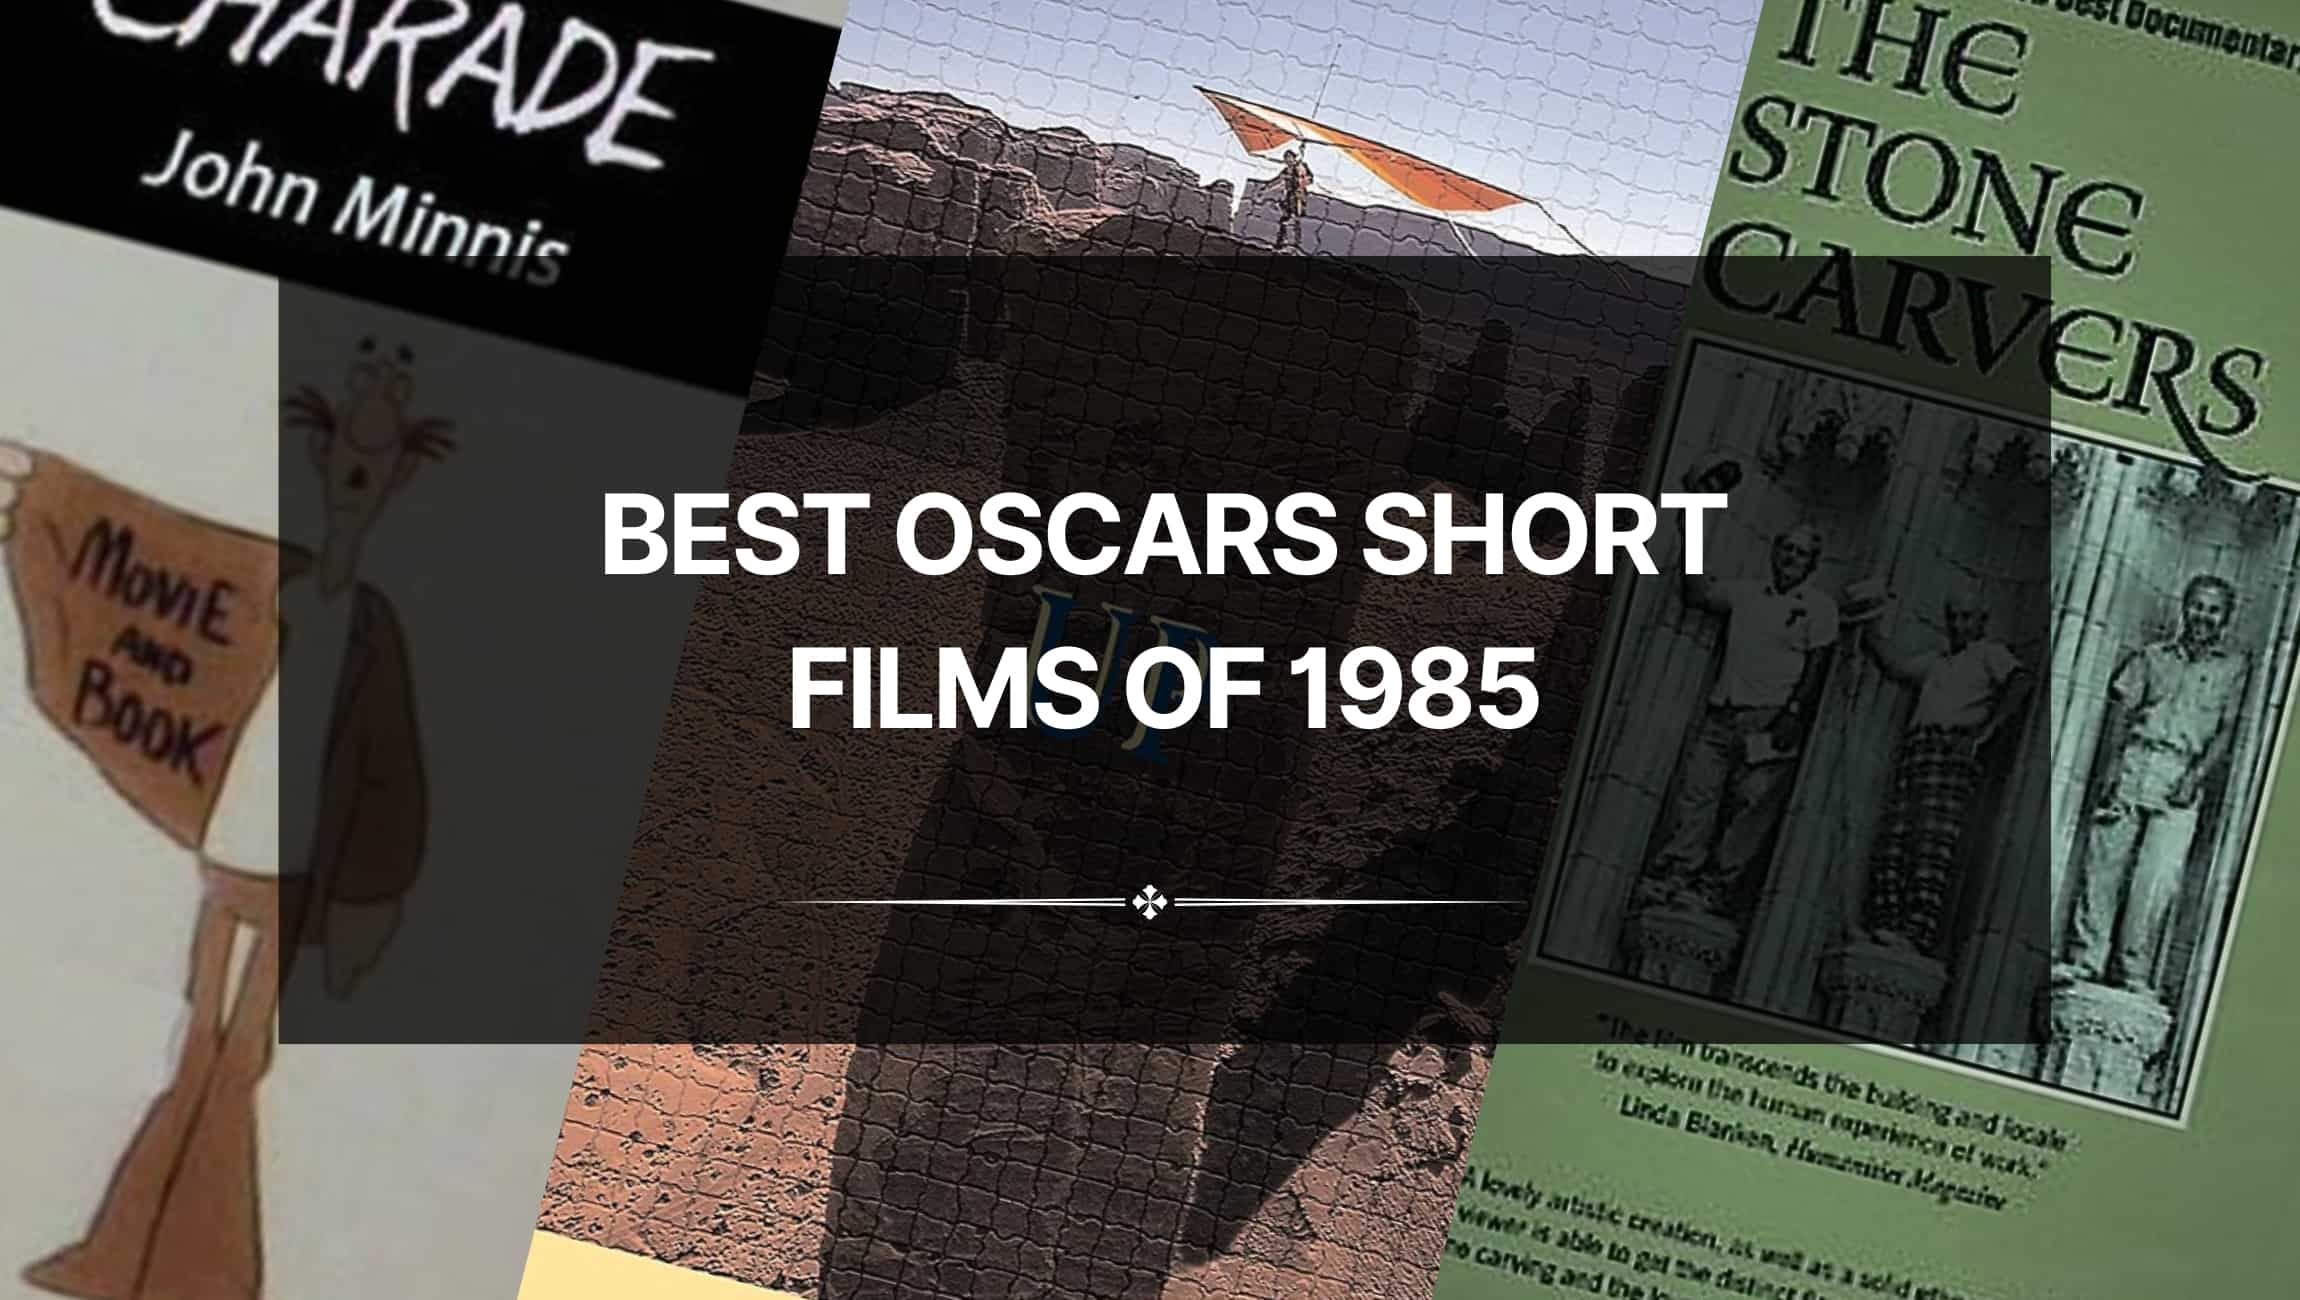 Best Oscars Short Films of 1985